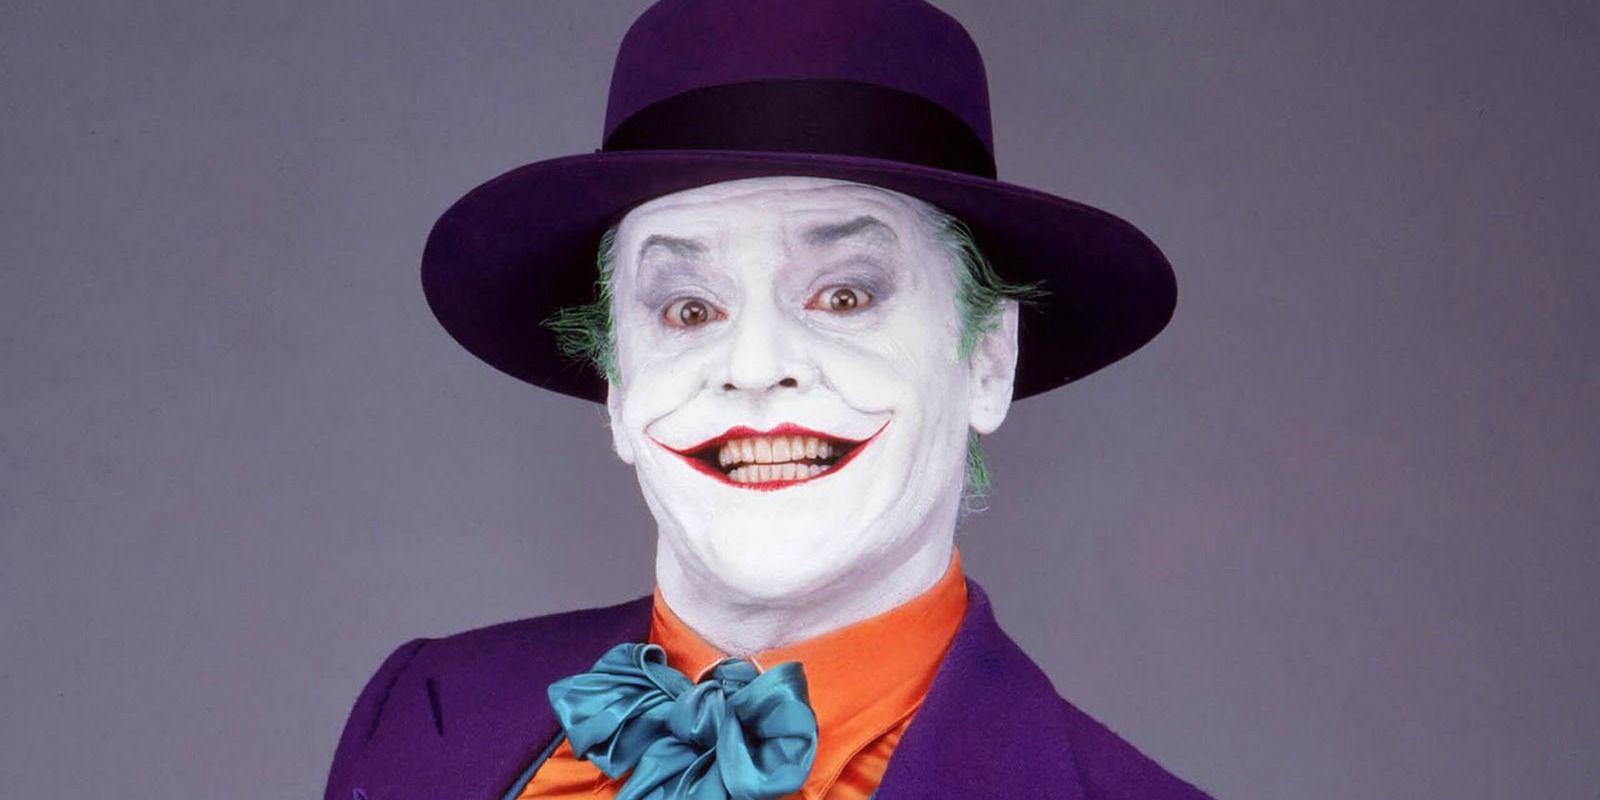 Nicholson Joker Promotional Still